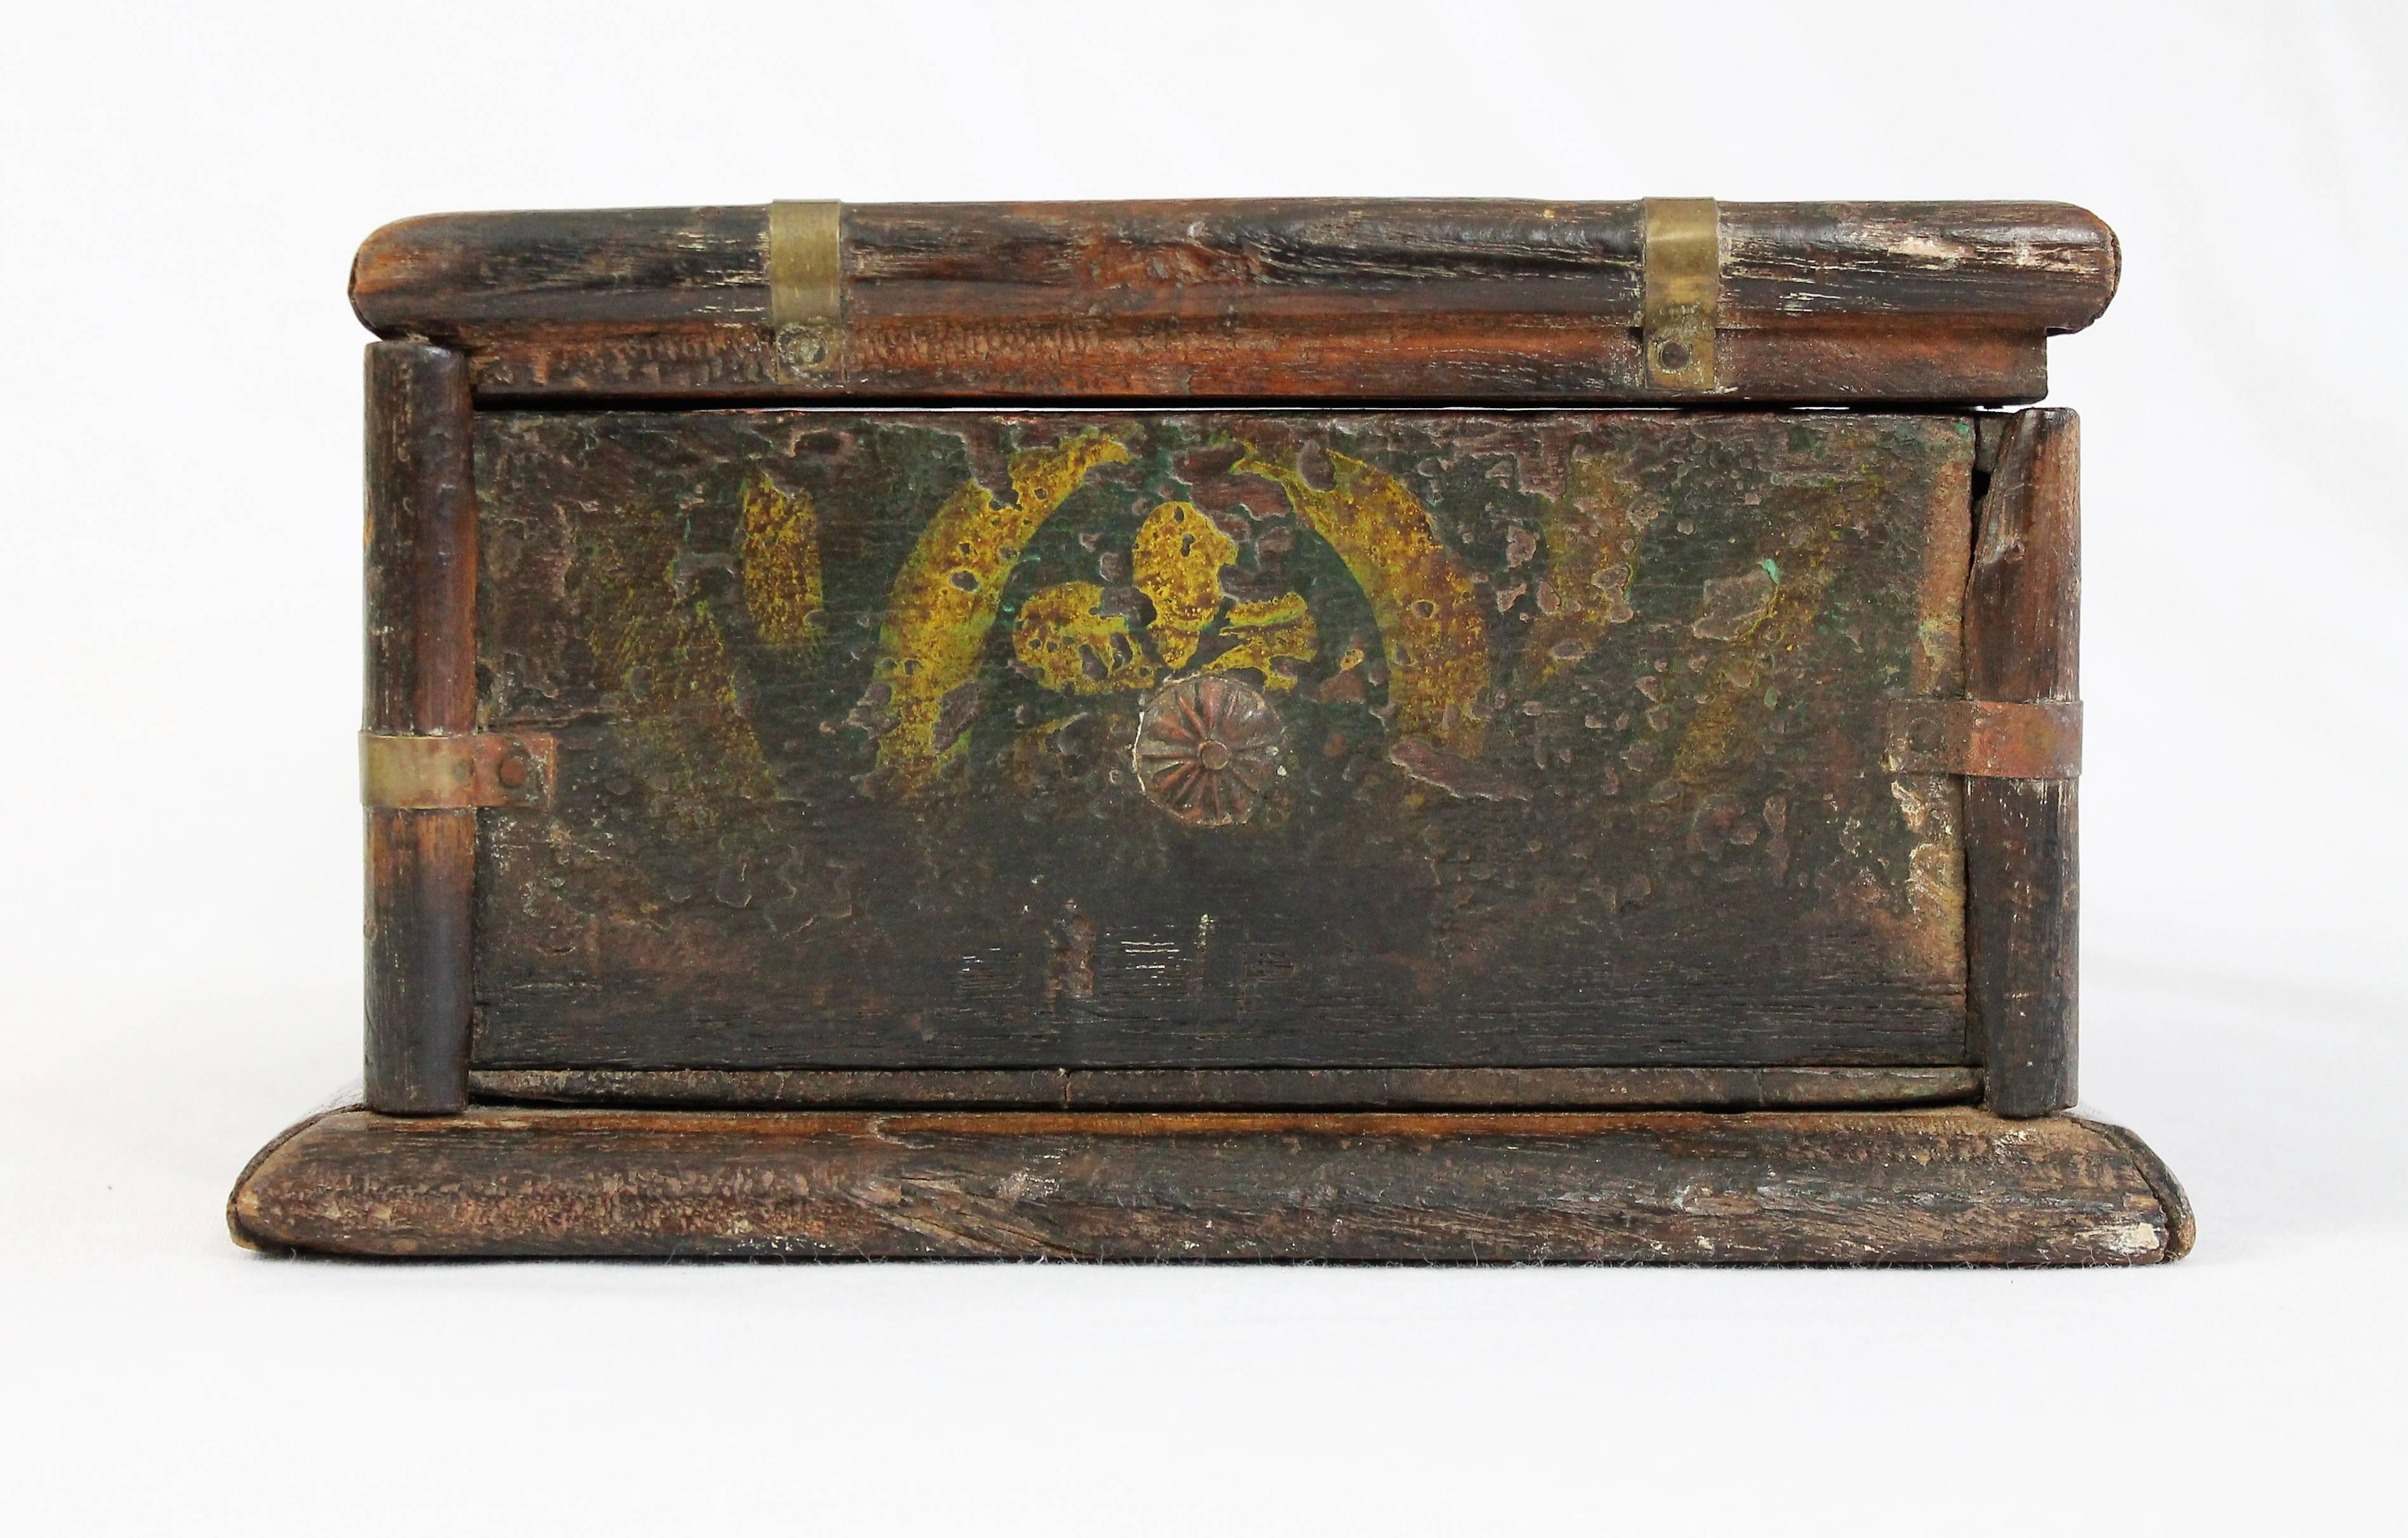 Polychromed Interesting 17th Century Polychrome Fruitwood Box